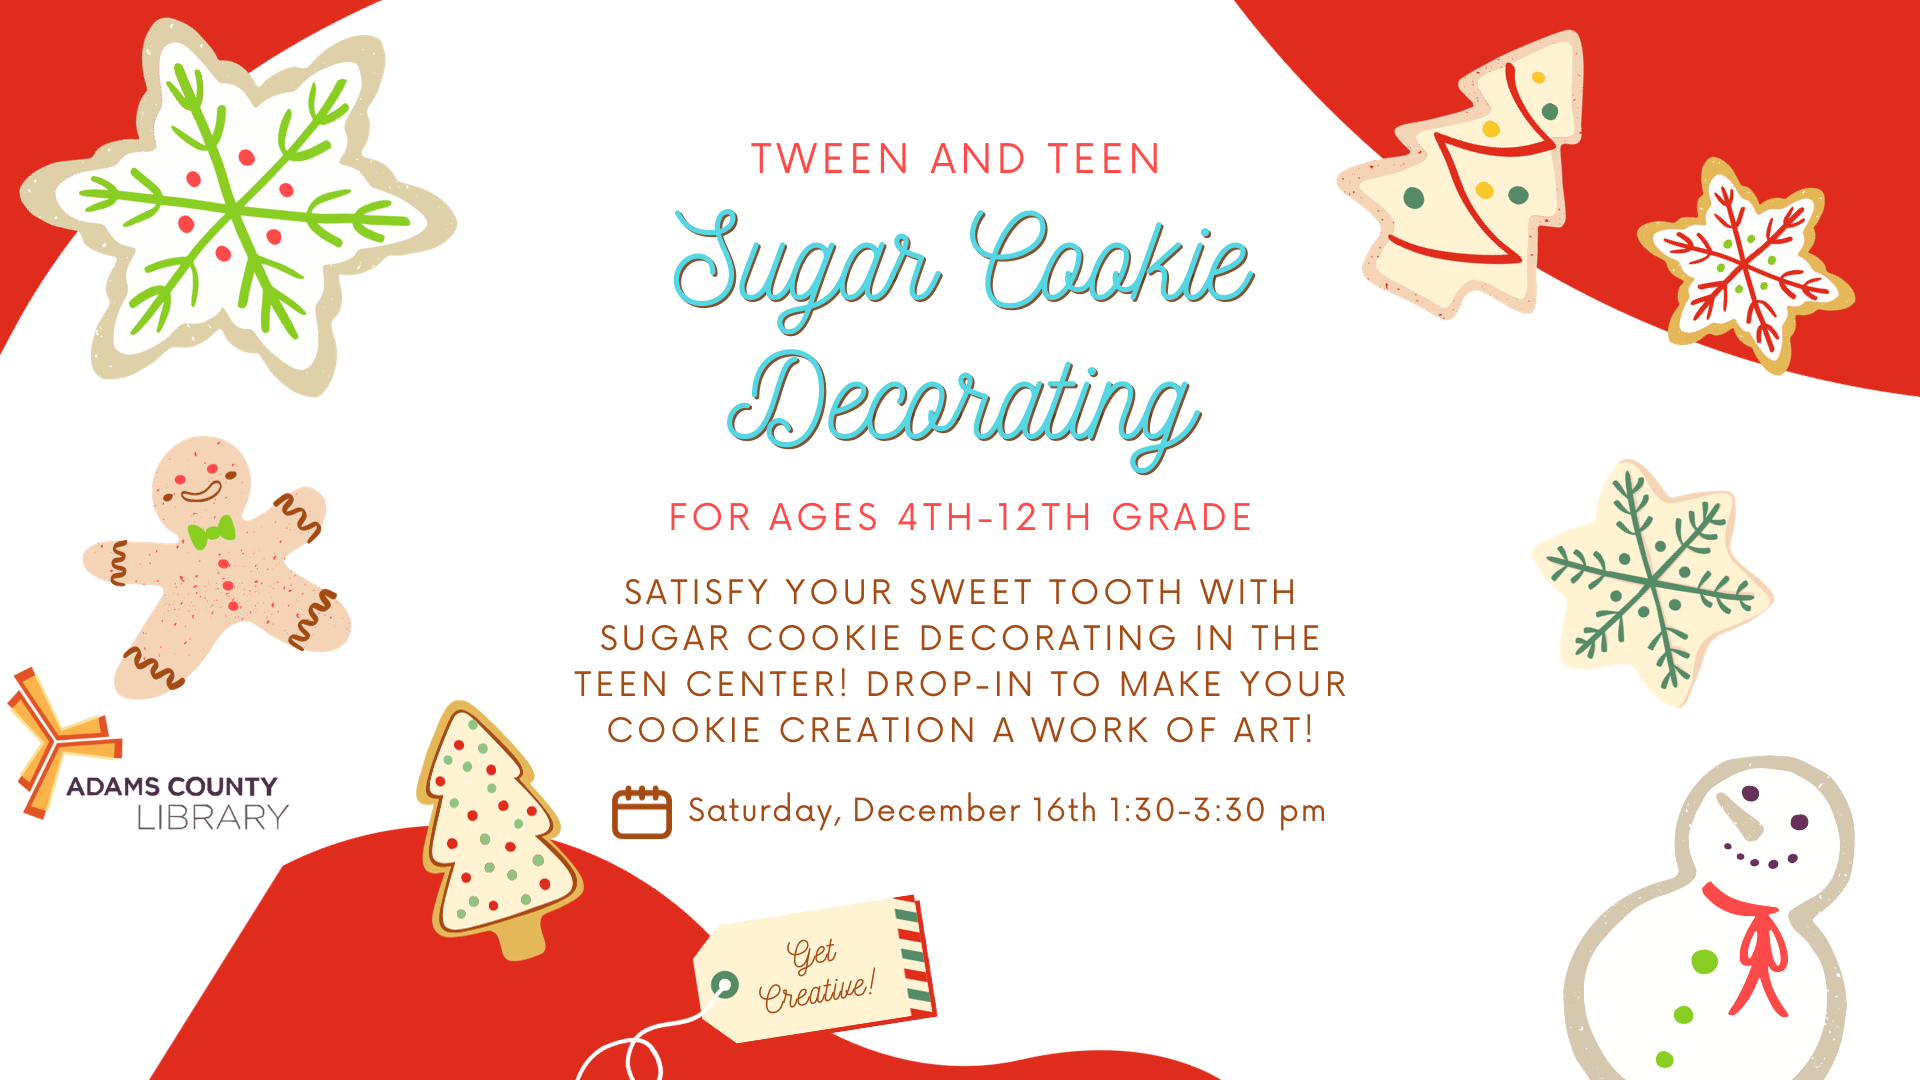 Tween and Teen Sugar Cookie Decorating